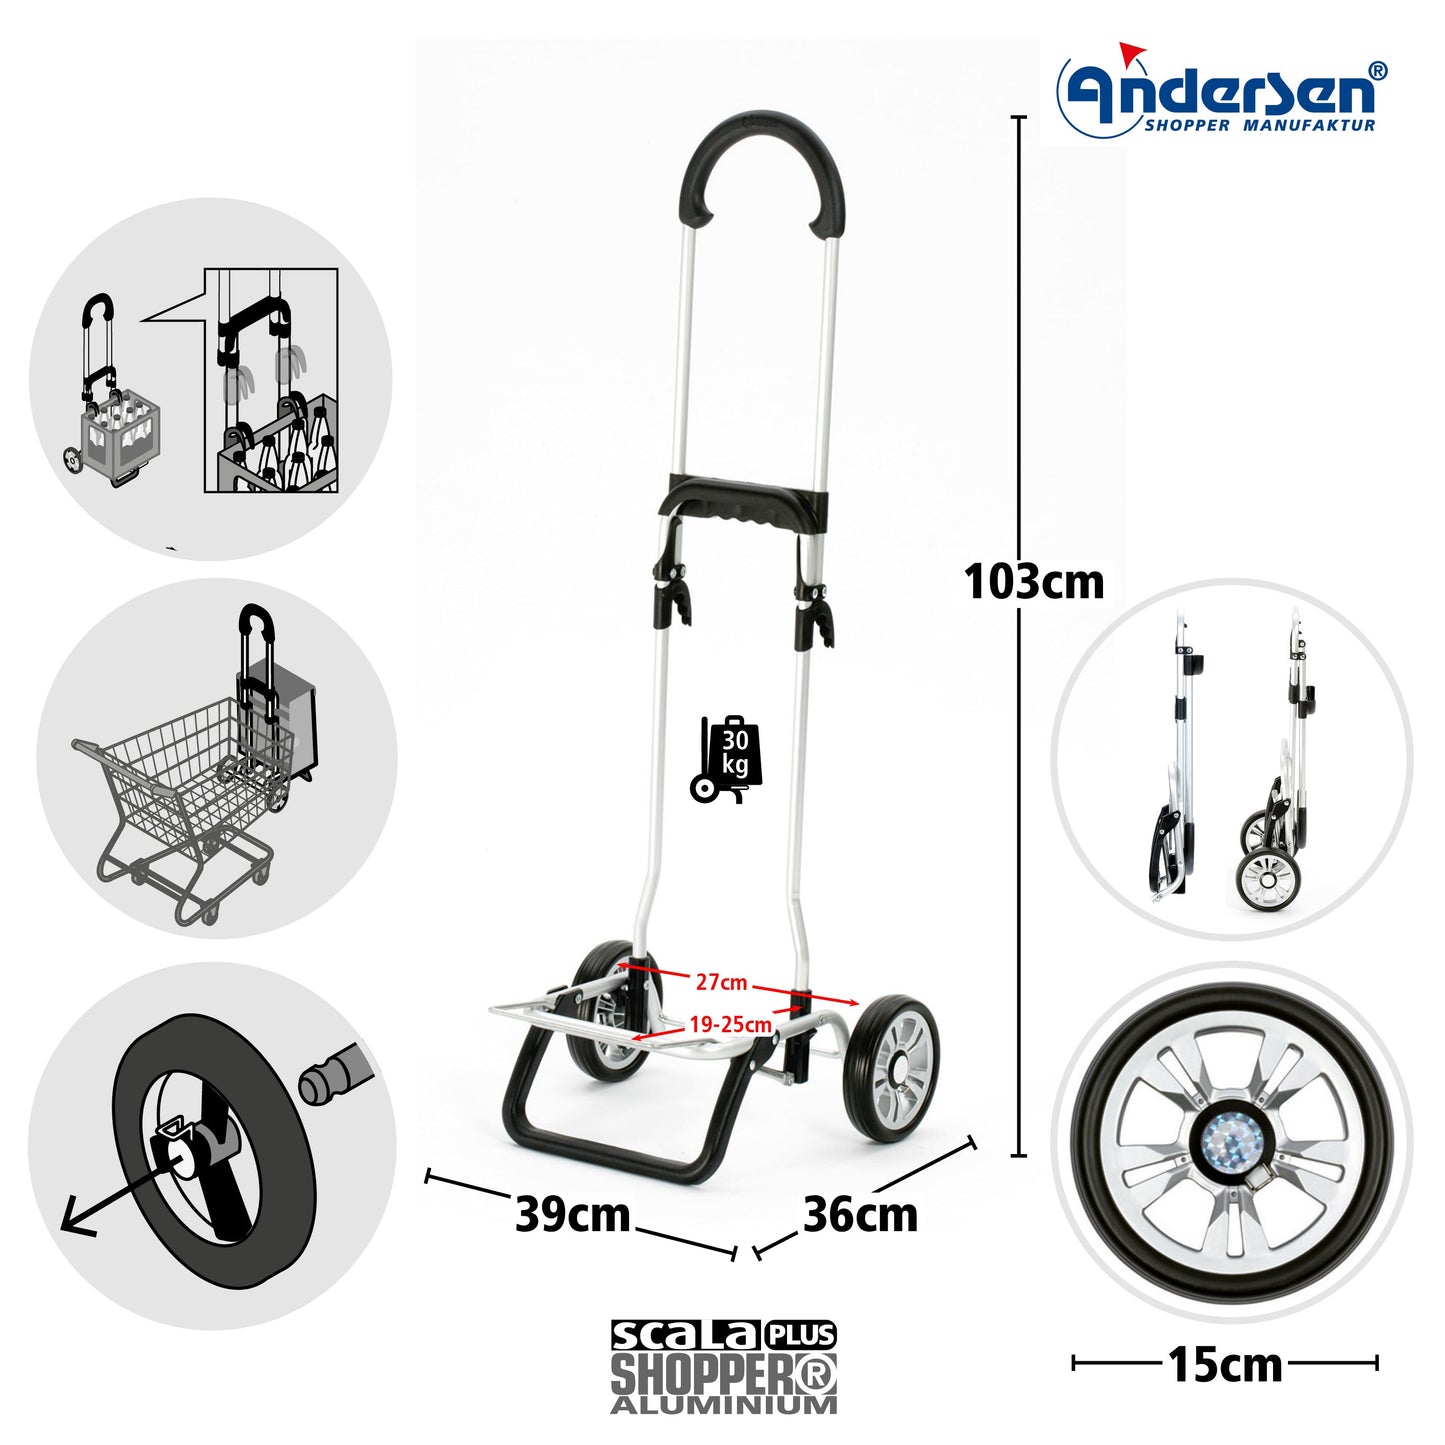 Andersen Shopper Manufaktur-Scala Shopper Plus Urs braun-www.shopping-trolley.ch-bild2